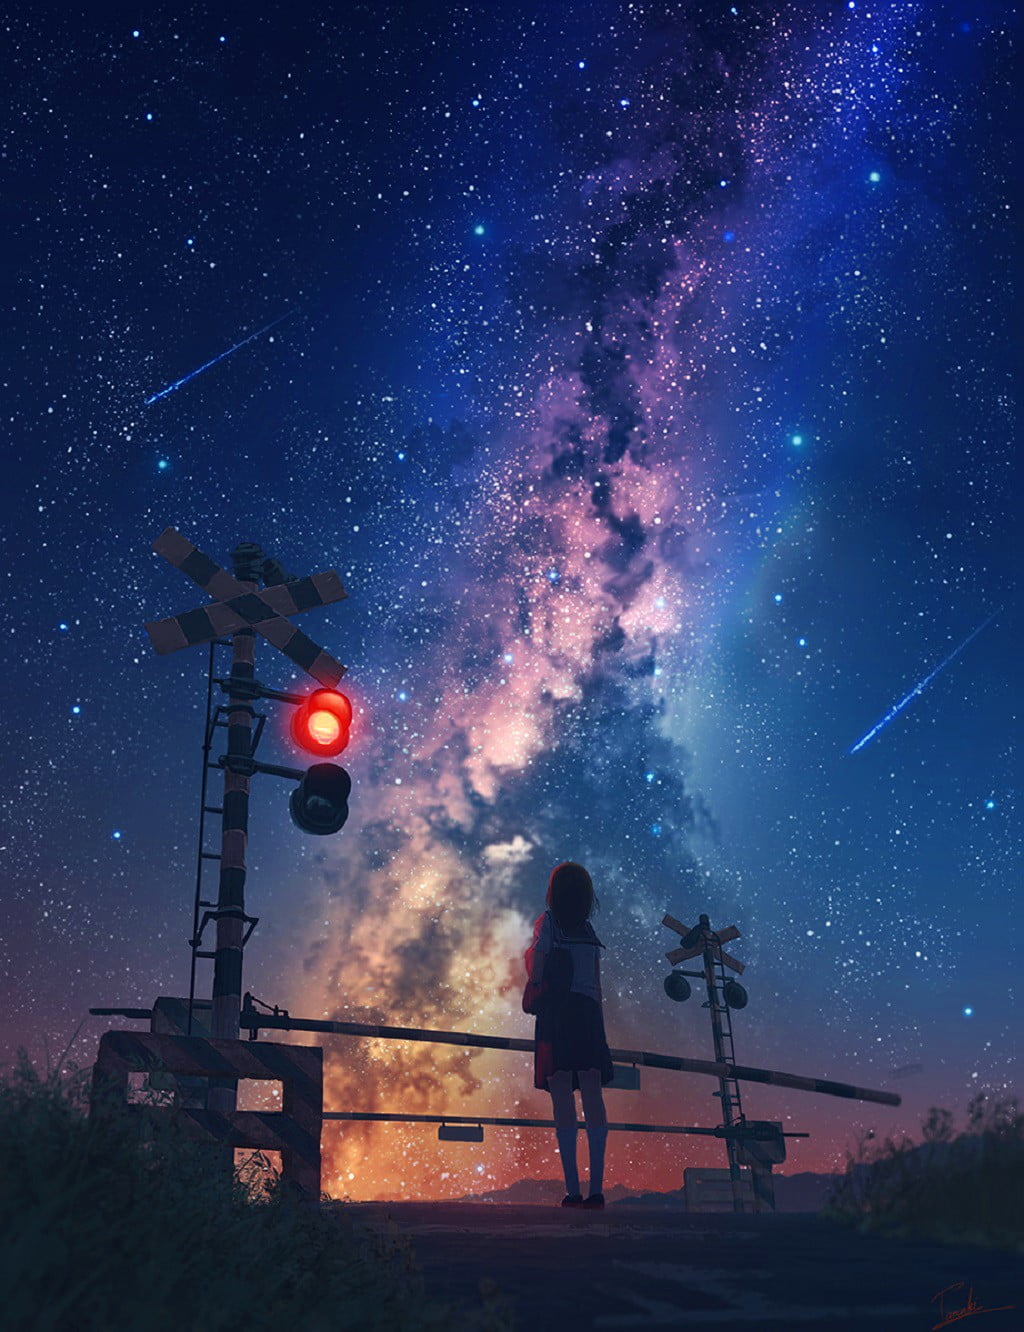 starry sky, anime, galaxy, stars, shooting stars, railway crossing